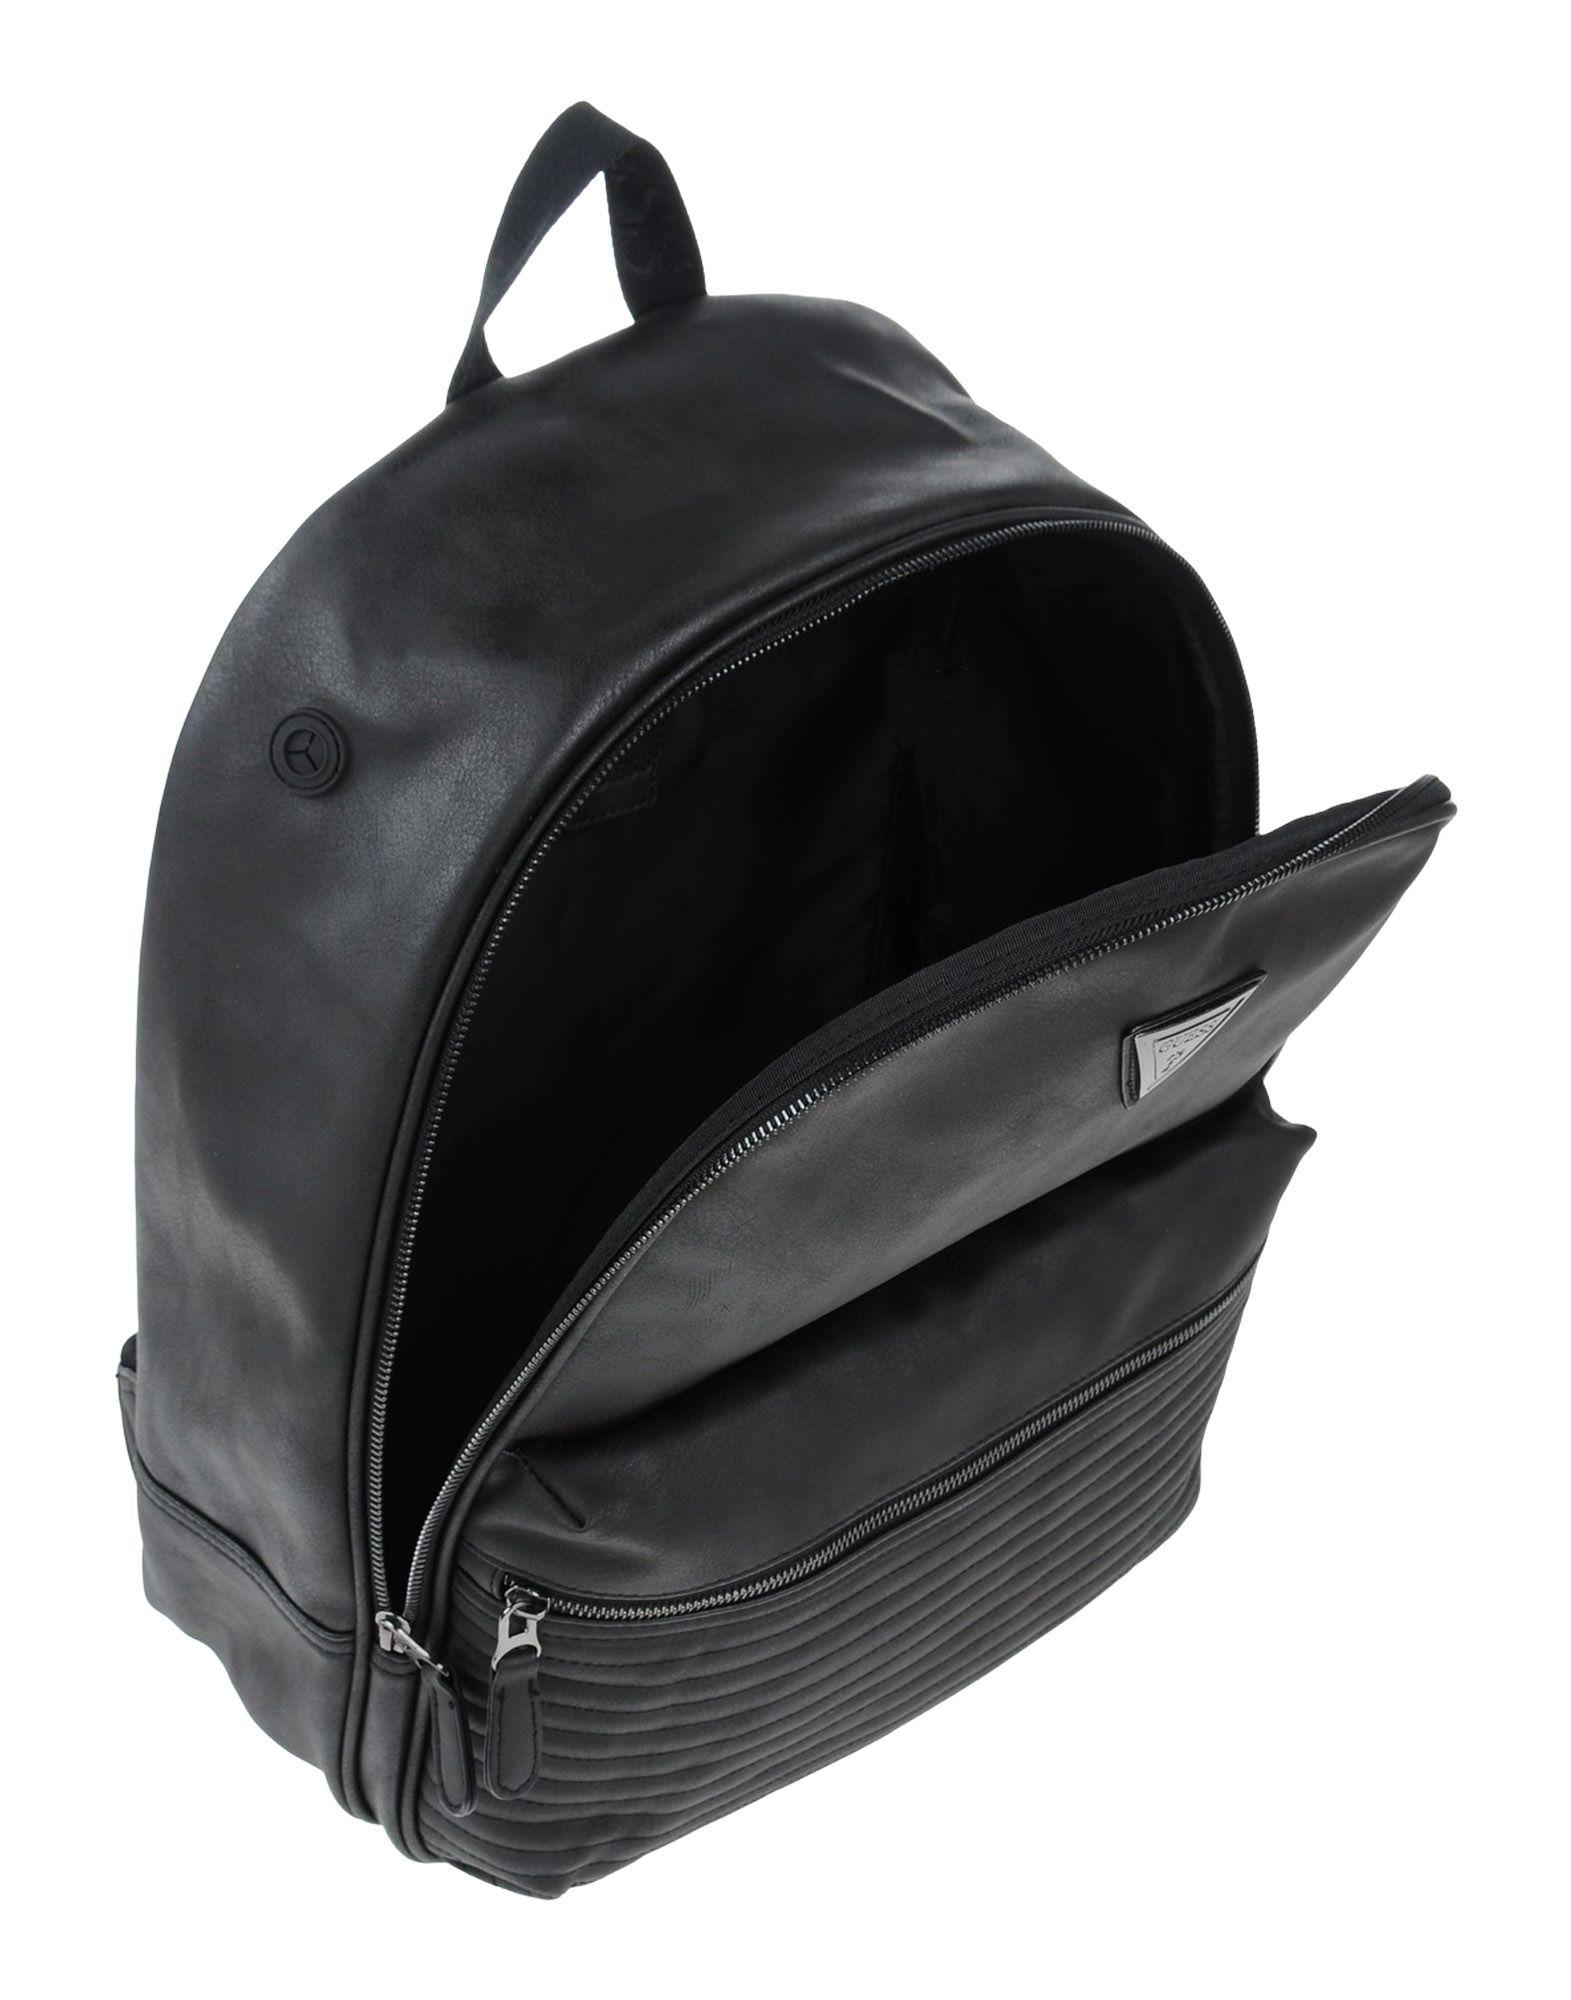 Guess Backpacks & Bum Bags in Black for Men - Lyst